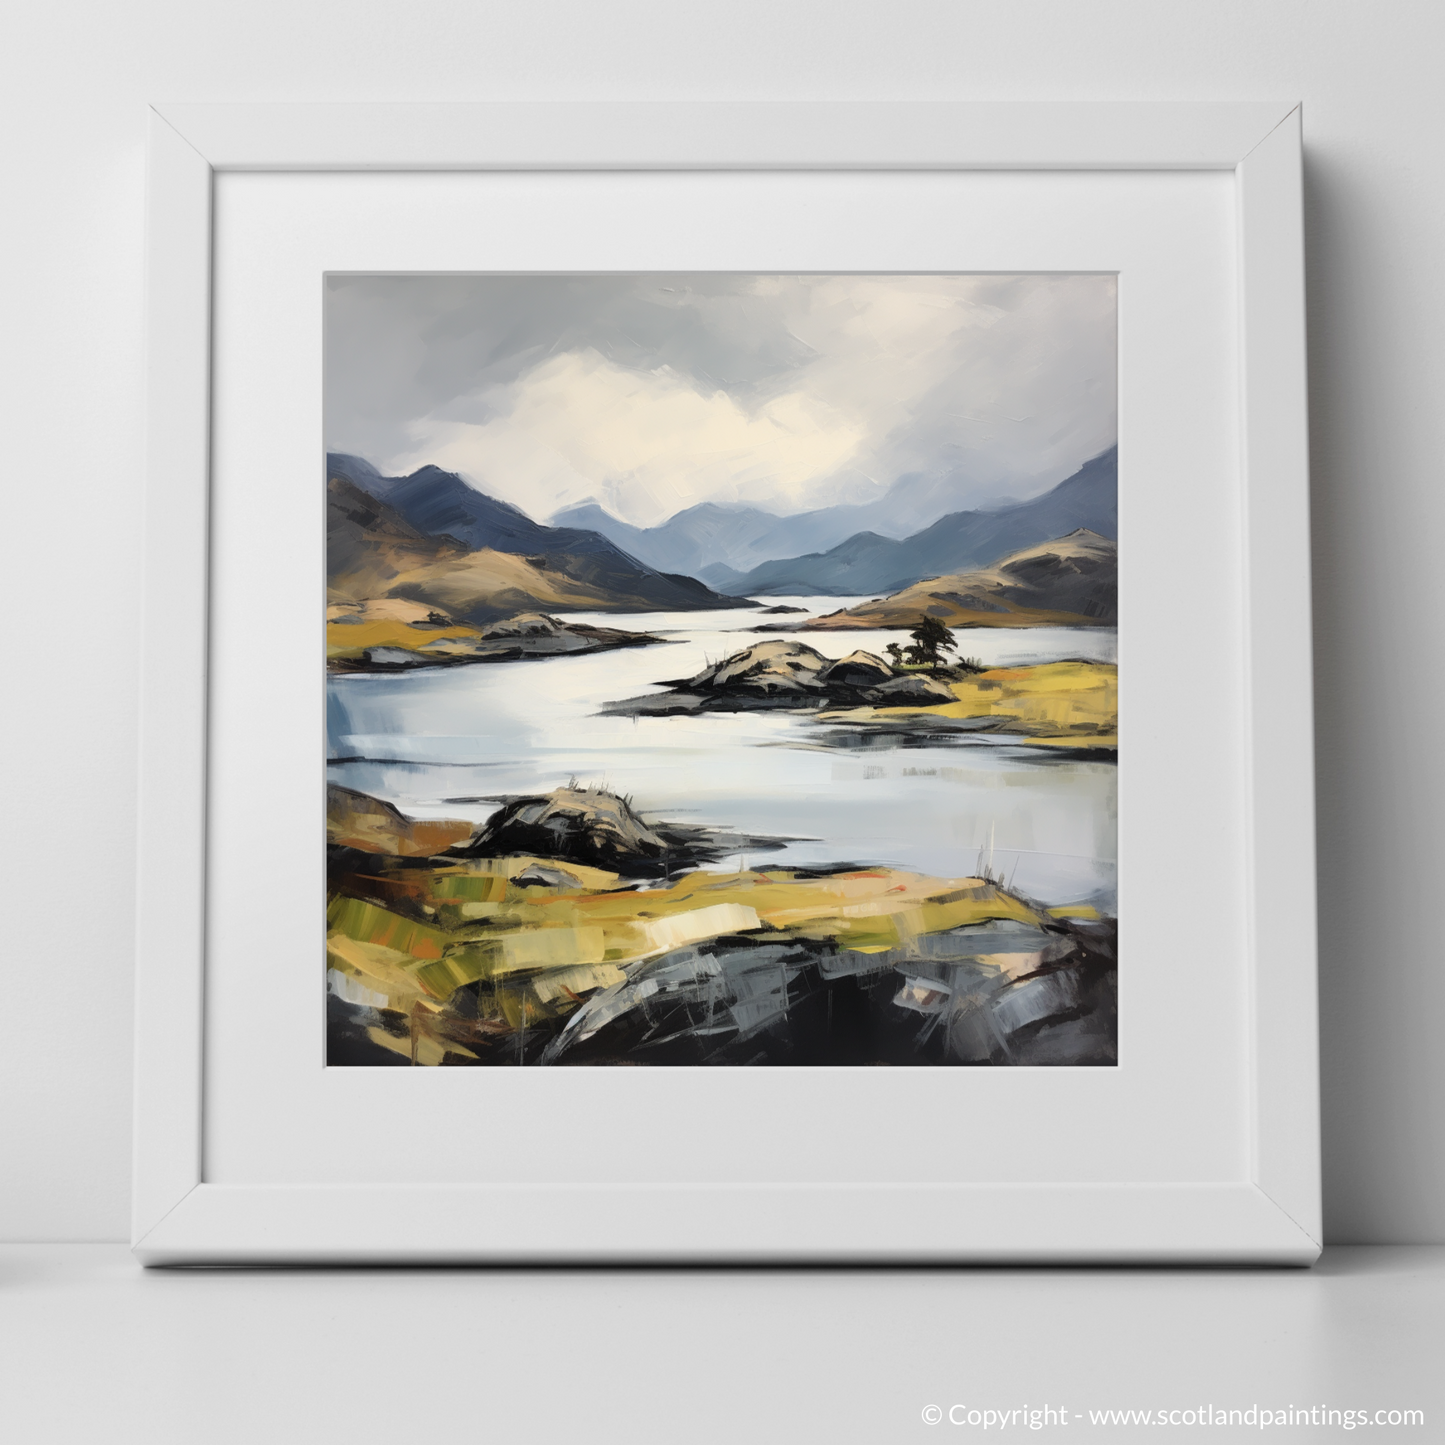 Art Print of Loch Morar, Highlands with a white frame